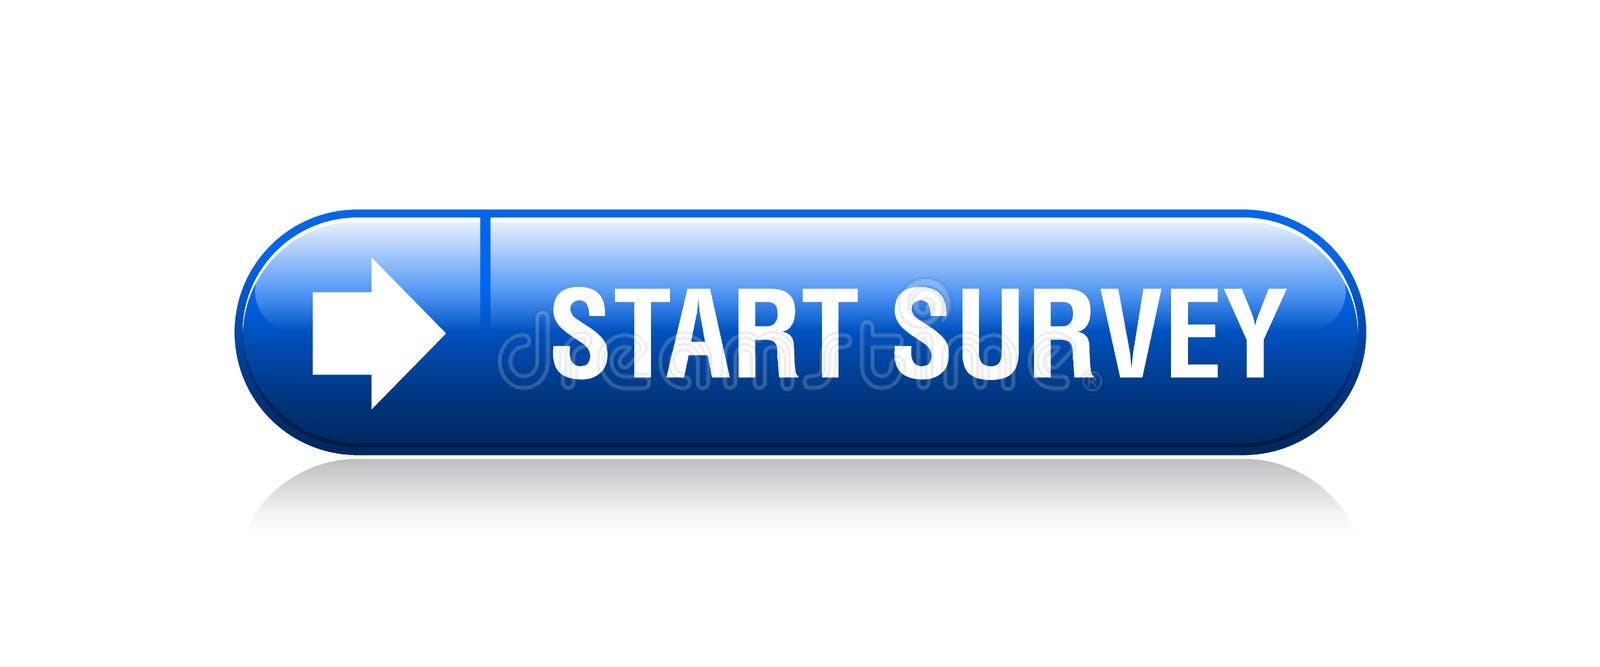 Start Survey? - Download